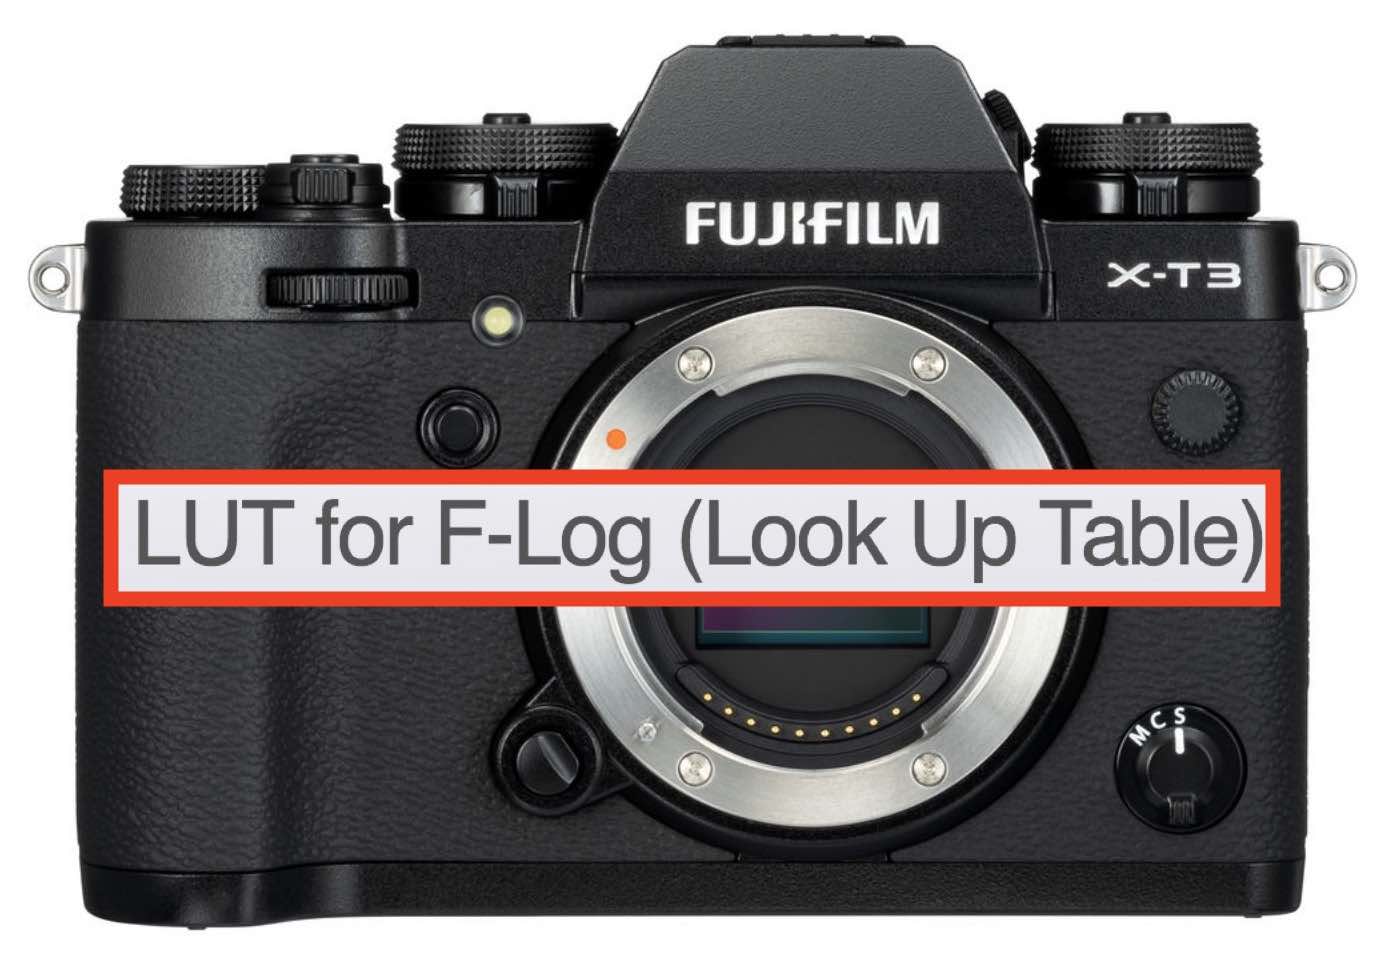 toevoegen aan Uitlijnen Leerling Fujifilm X-T3 Look Up Table for F-Log Available Now and First Feedback -  Fuji Rumors